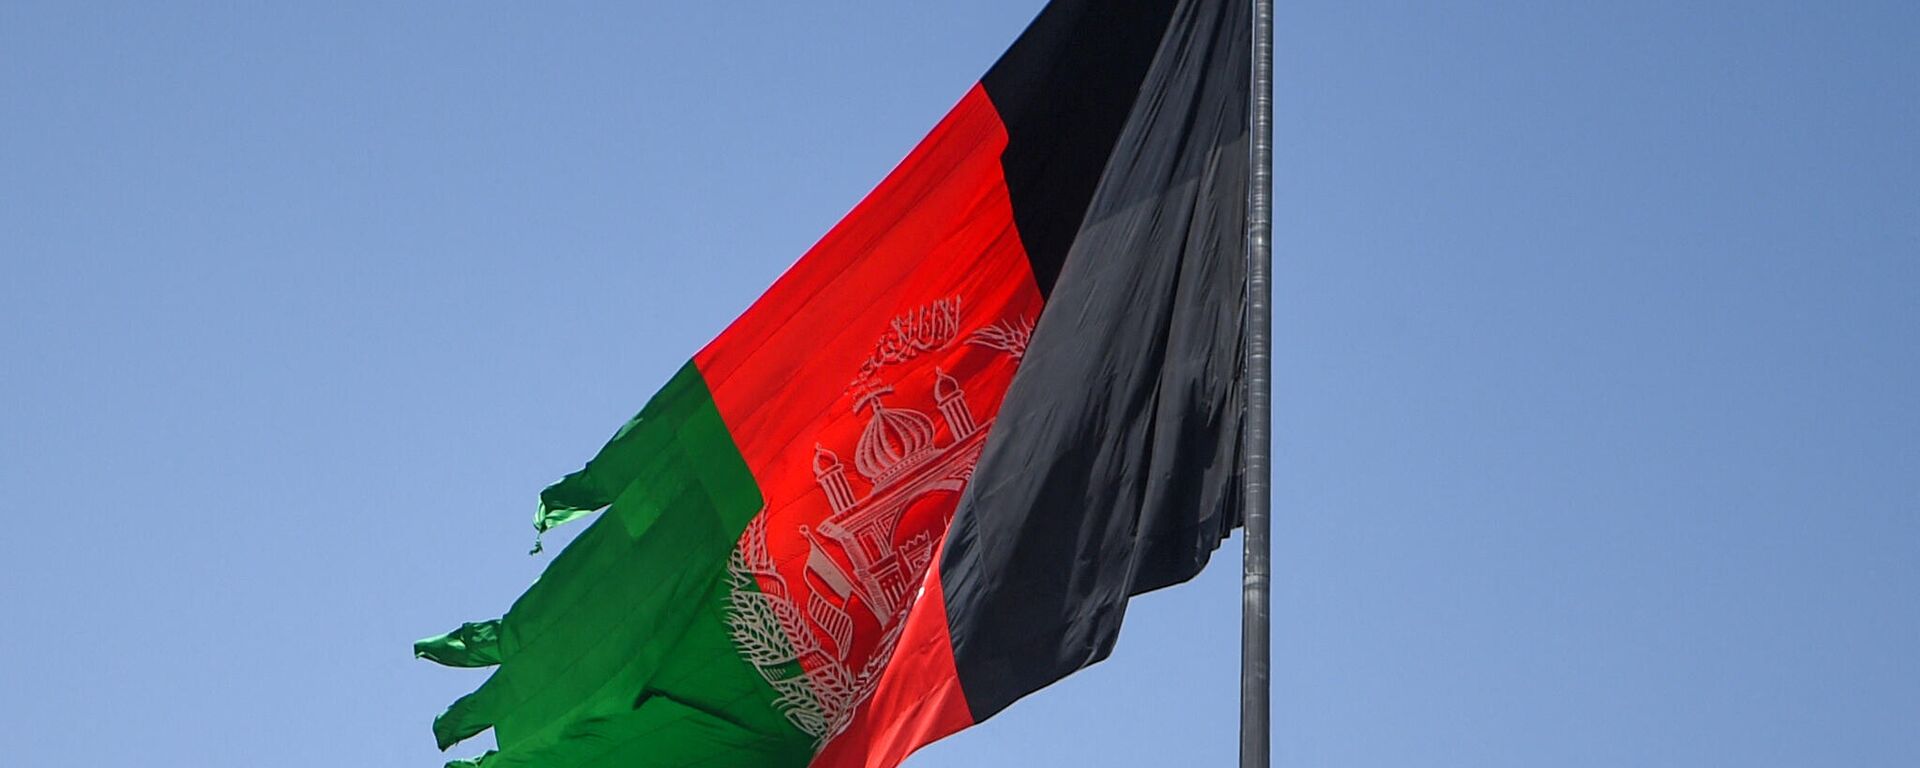 Bandera de Afganistán - Sputnik Mundo, 1920, 17.03.2021